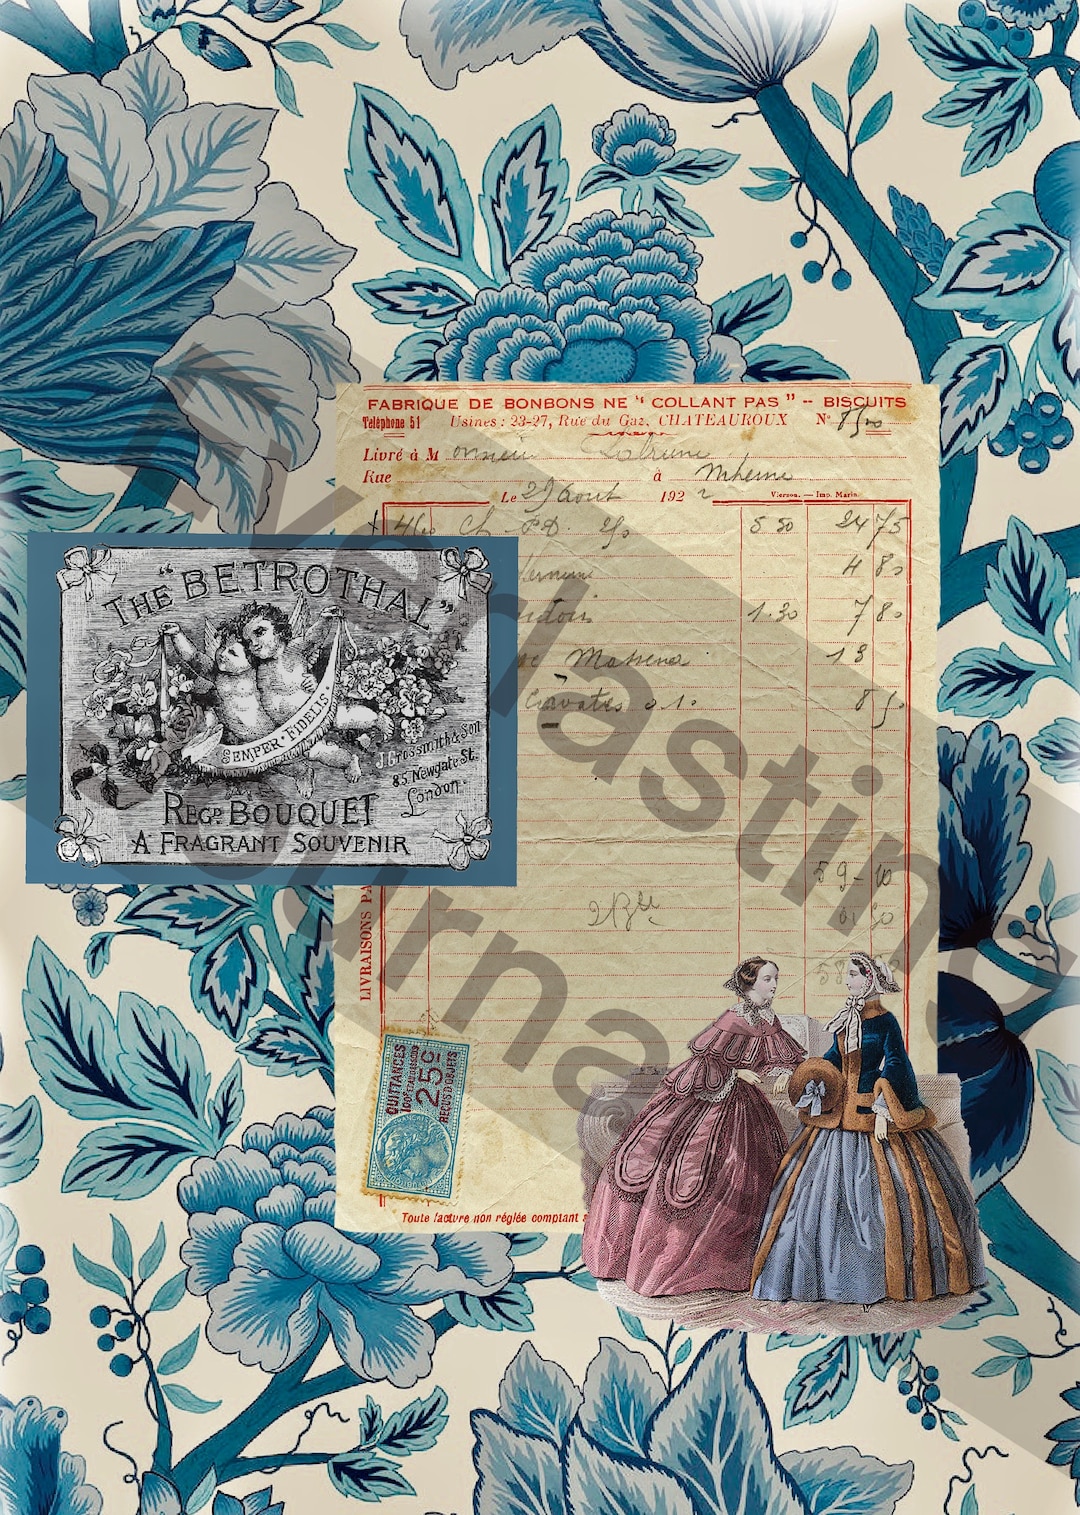 Aqua Blue Junk Journal Pages, Blank Scrapbook Kit, Vintage Light Antiq By  DigitalPrintableMe